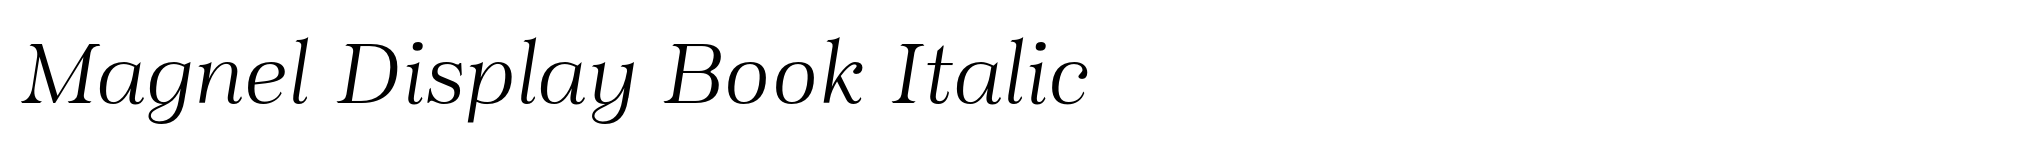 Magnel Display Book Italic image